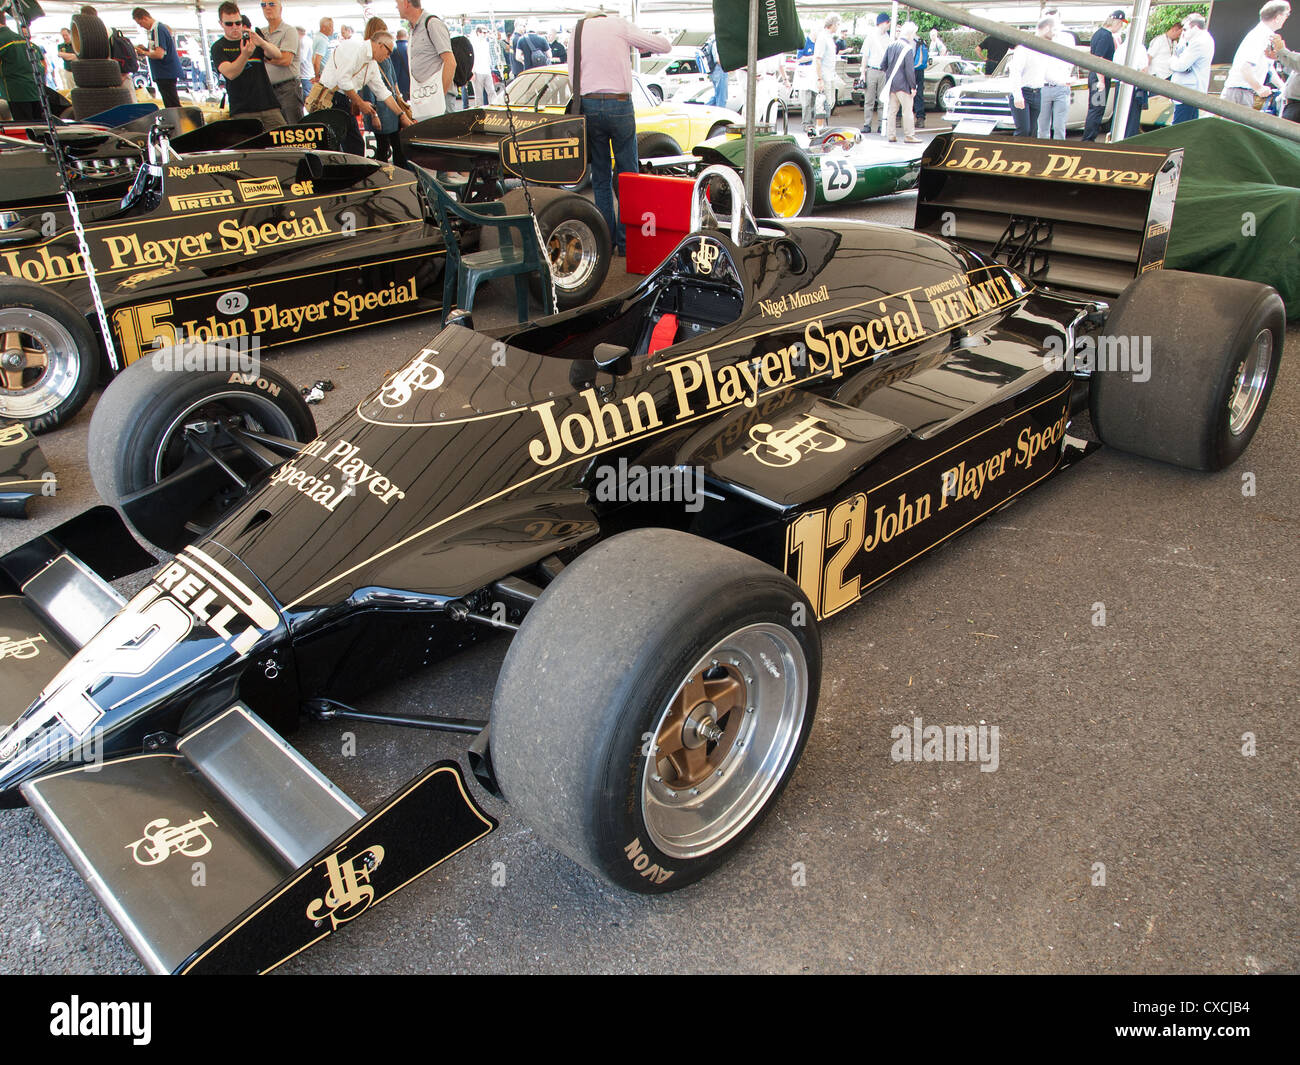 Mansellss Lotus John Player Special F1 Rennwagen Goodwood Festival Of Speed England UK 2012 Stockfoto